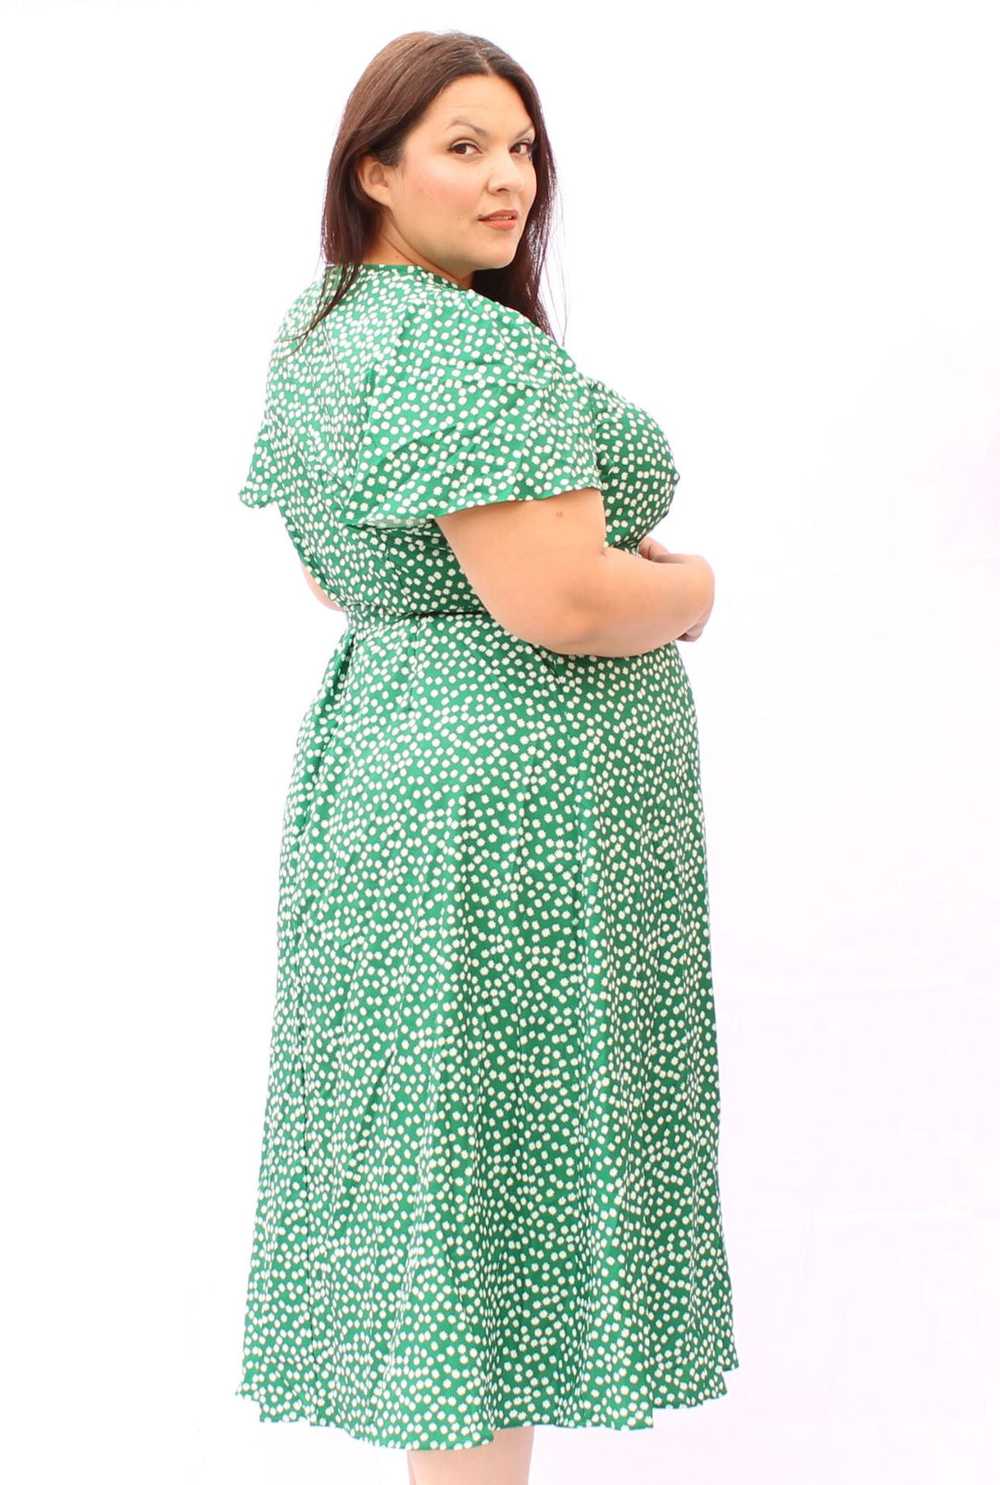 Bloomchic Green Midi Flower Wrap Dress 18, 20, 22 - image 3